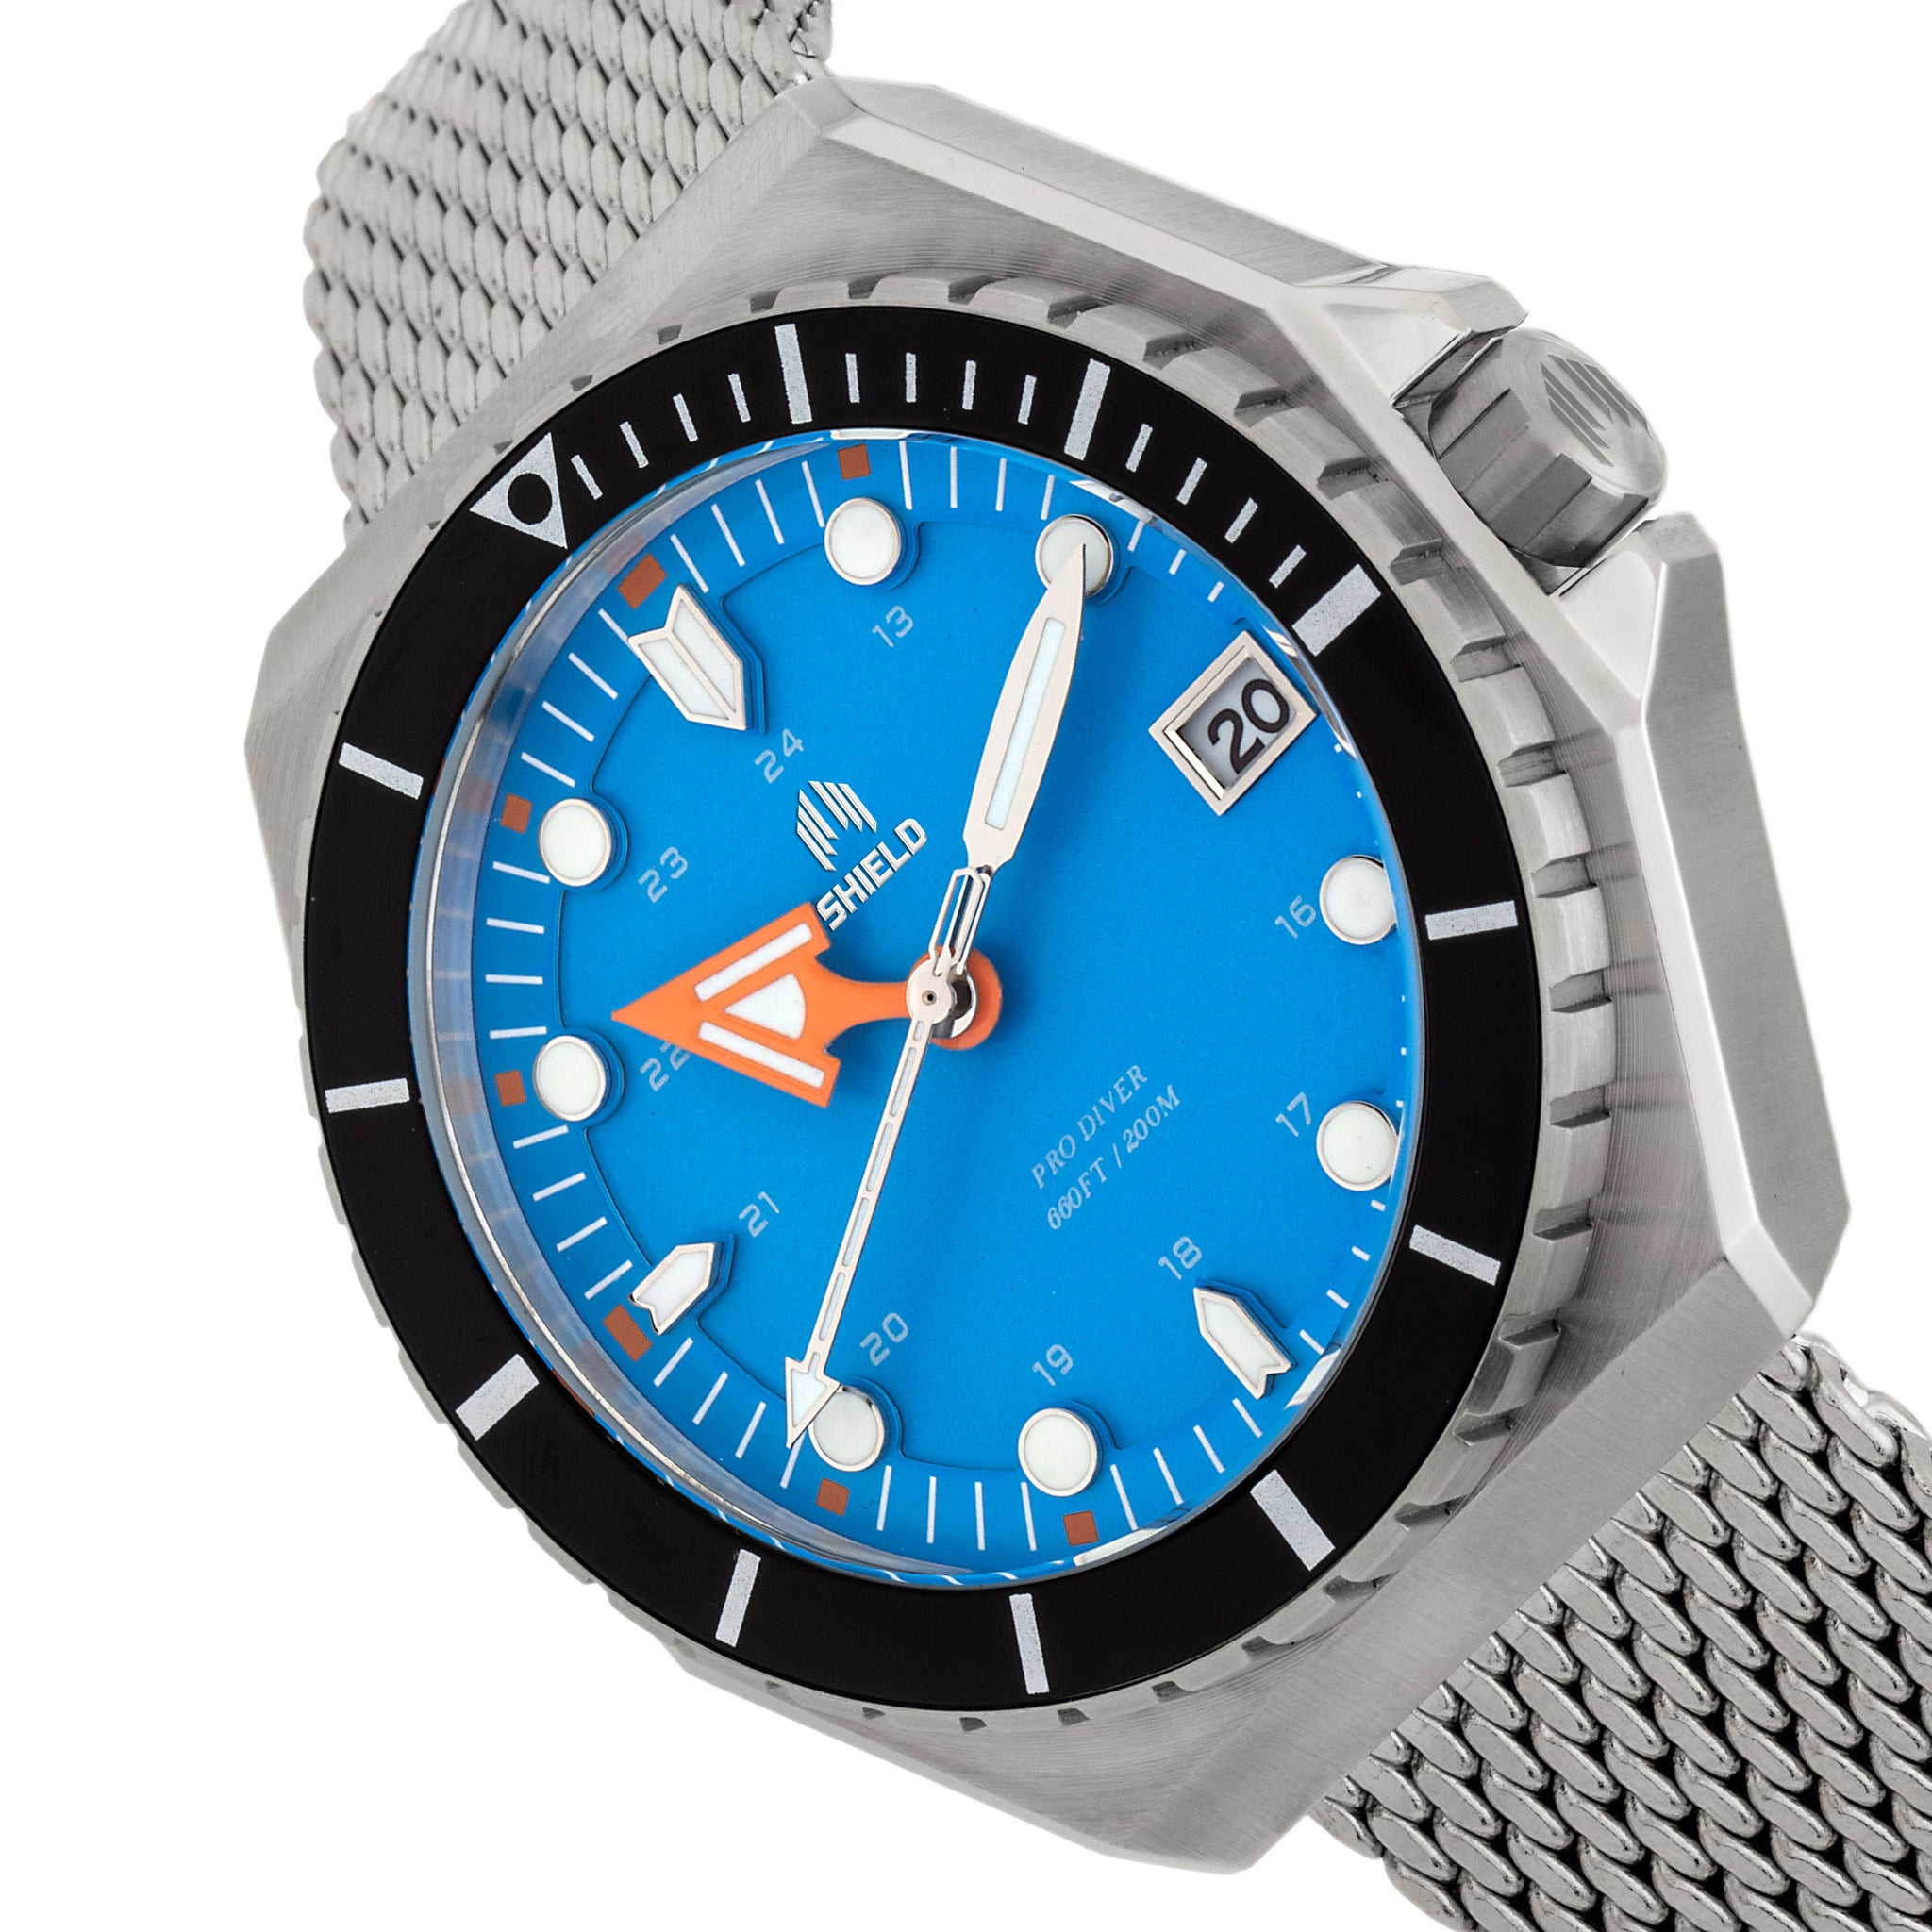 Shield Marius Bracelet Men's Diver Watch w/Date - Silver/Blue - SLDSH103-4